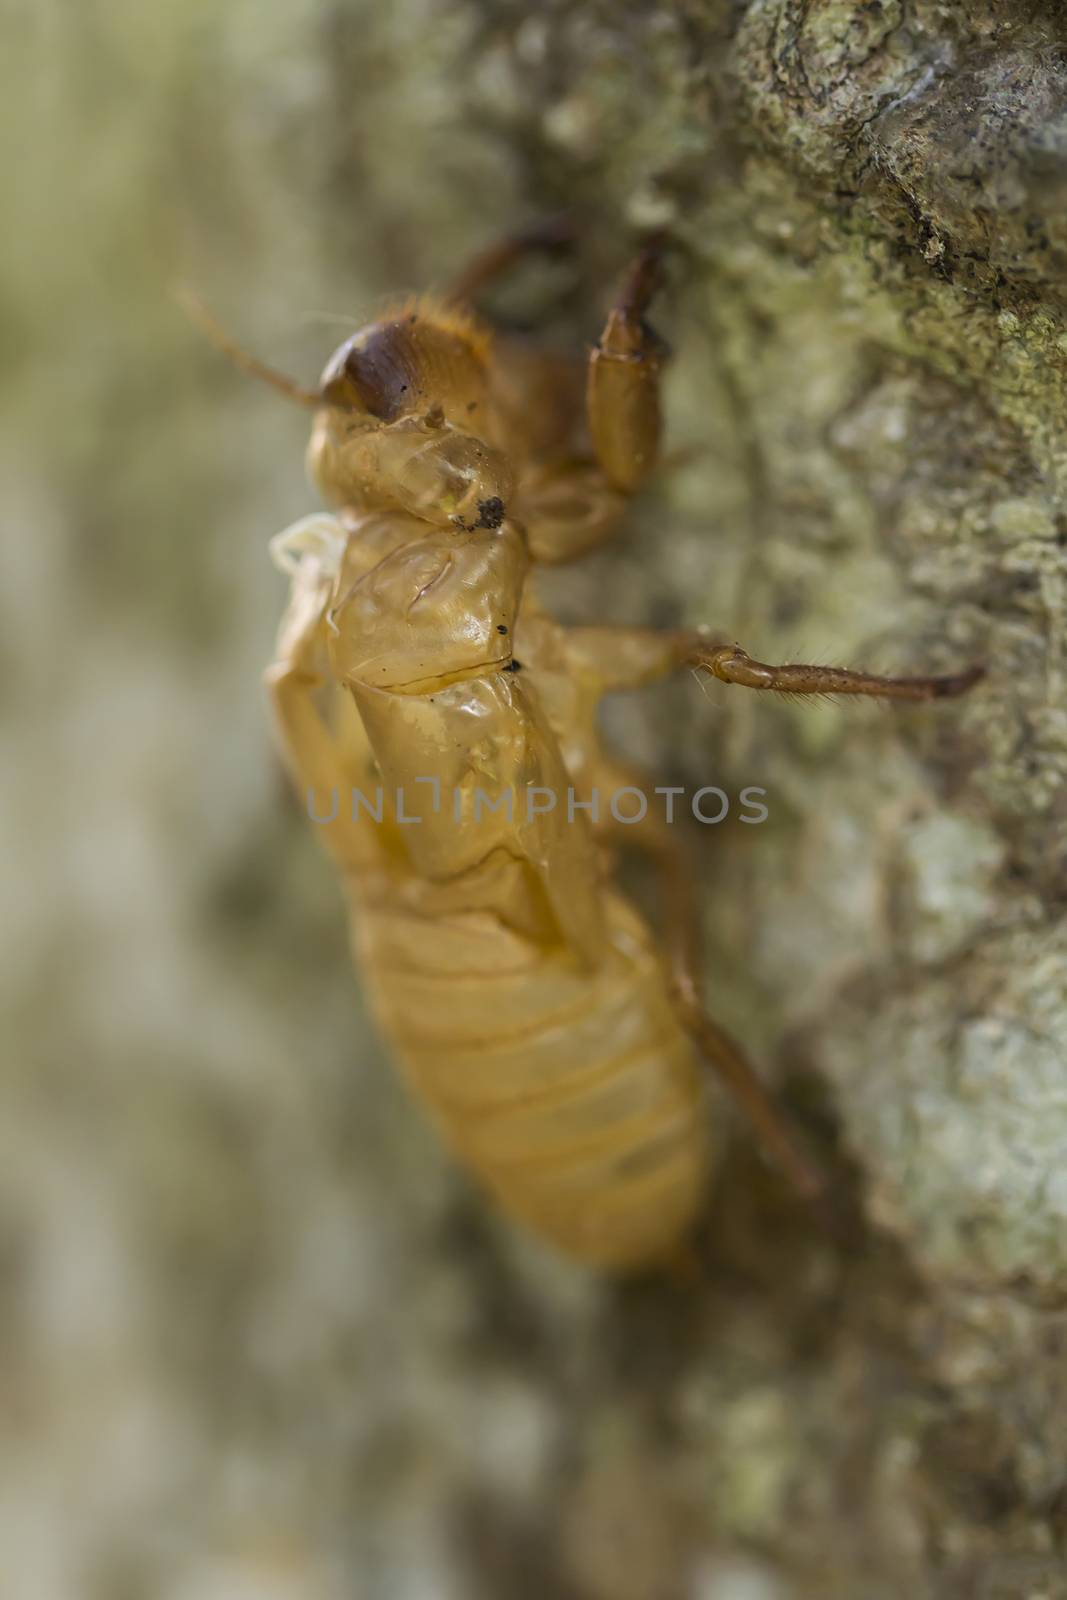 Cicada shell on tree